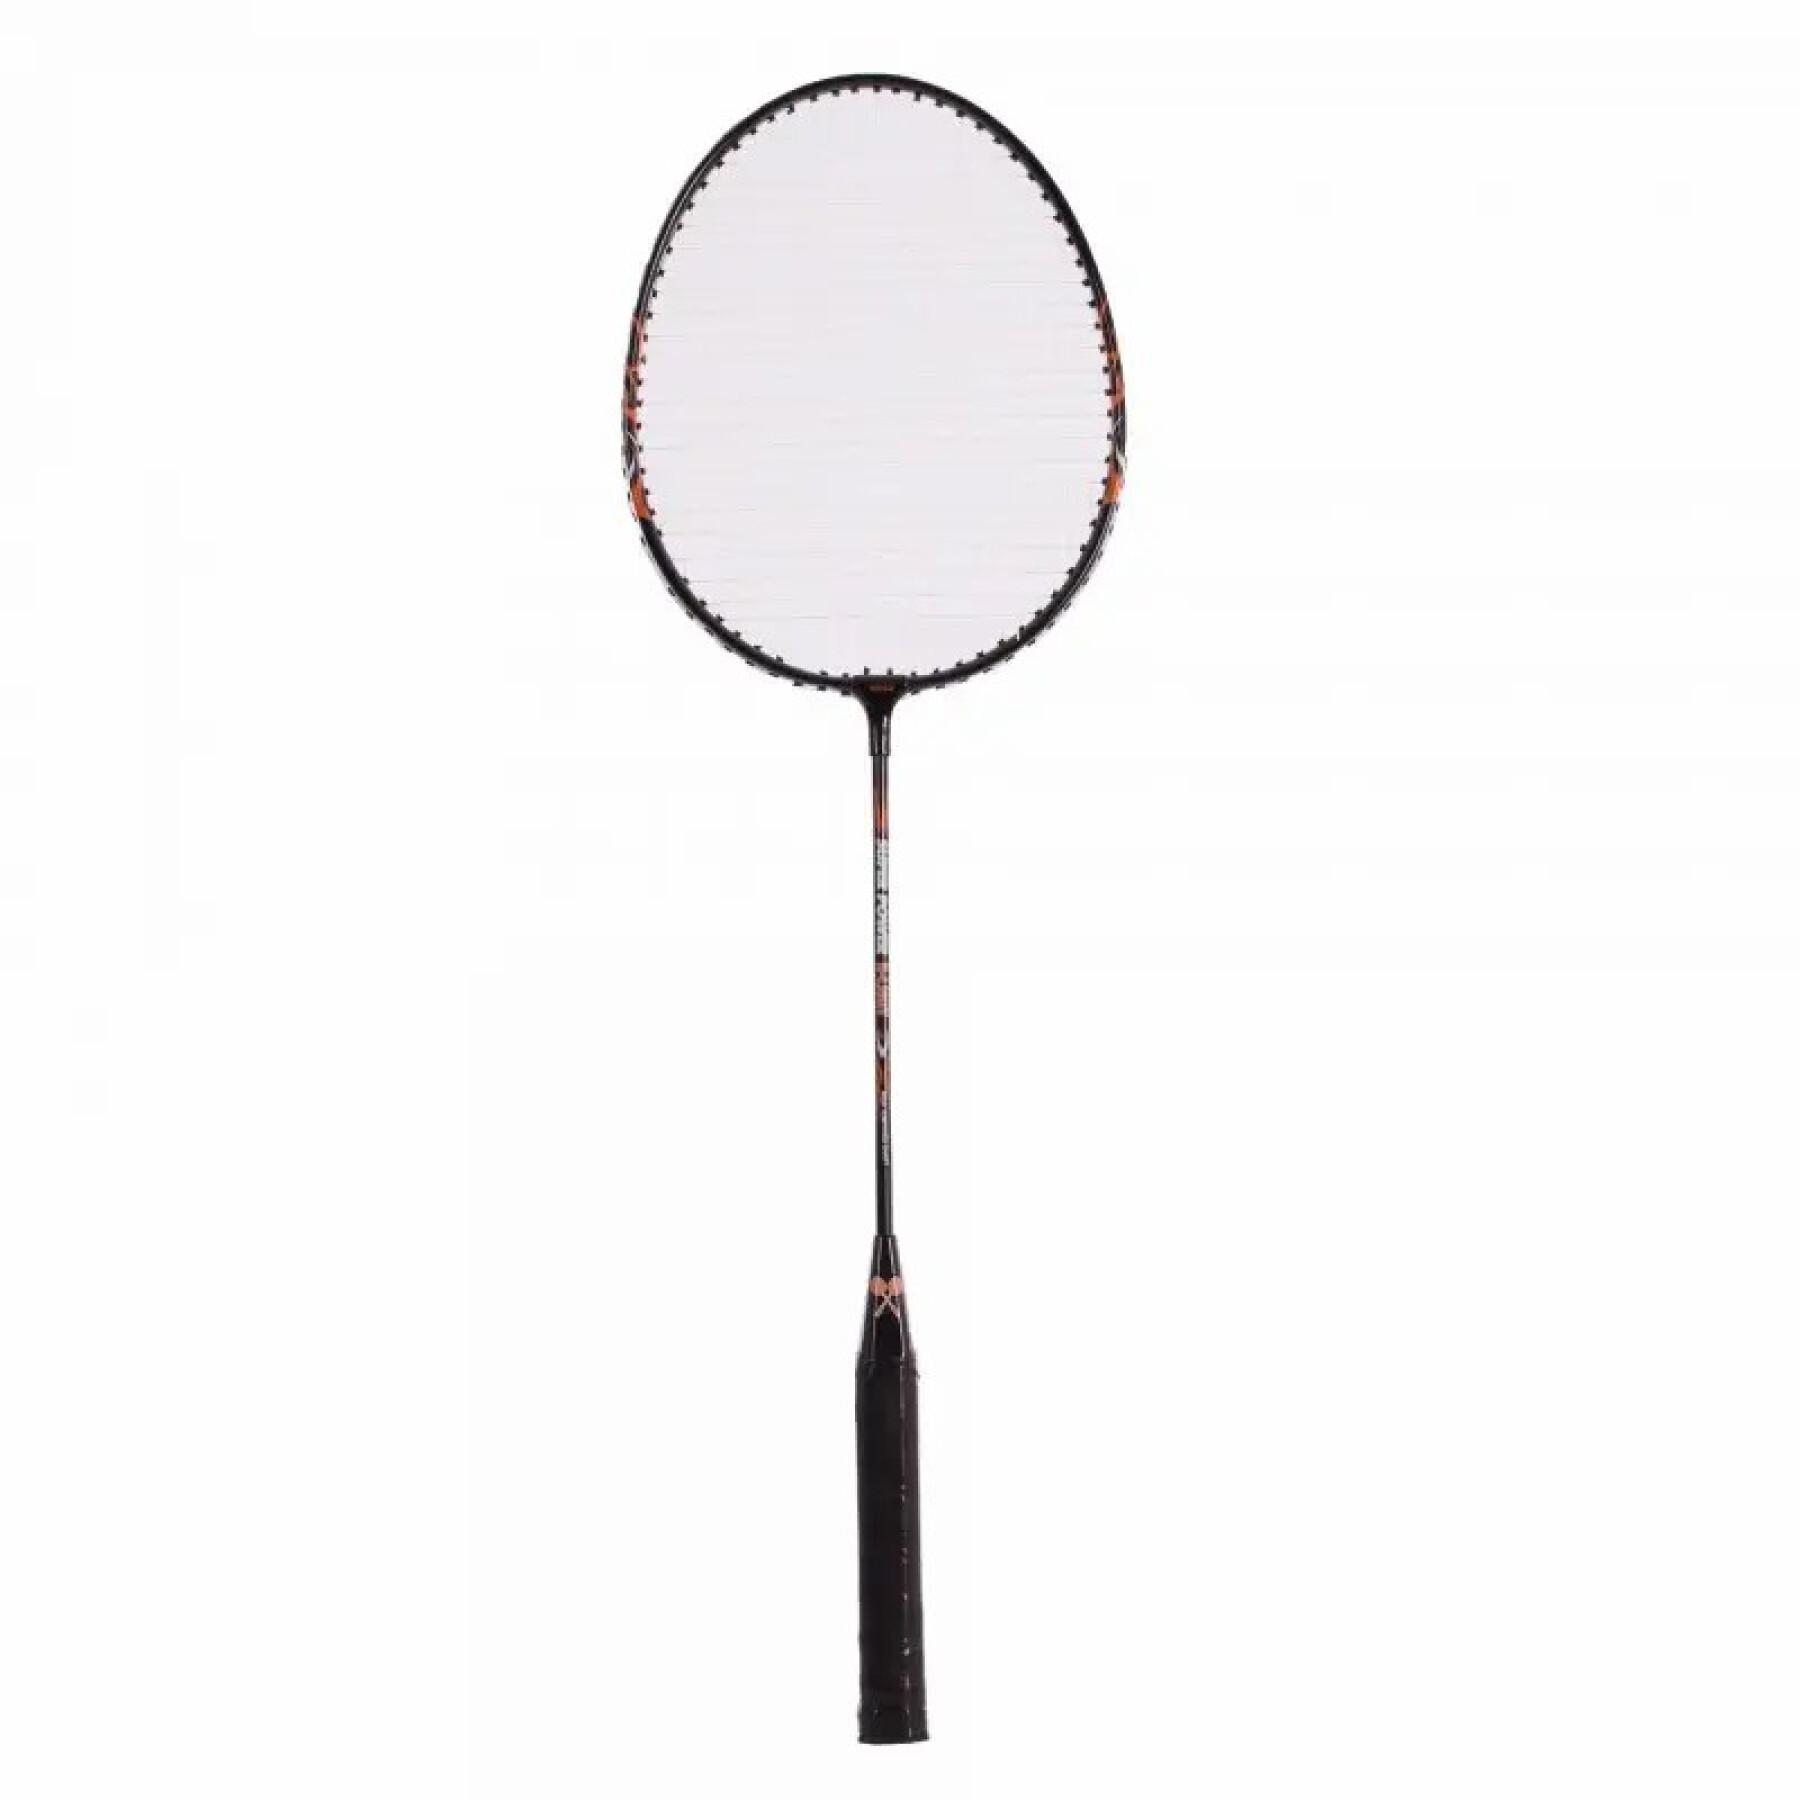 Racchetta da badminton Rox Super Power R-Light